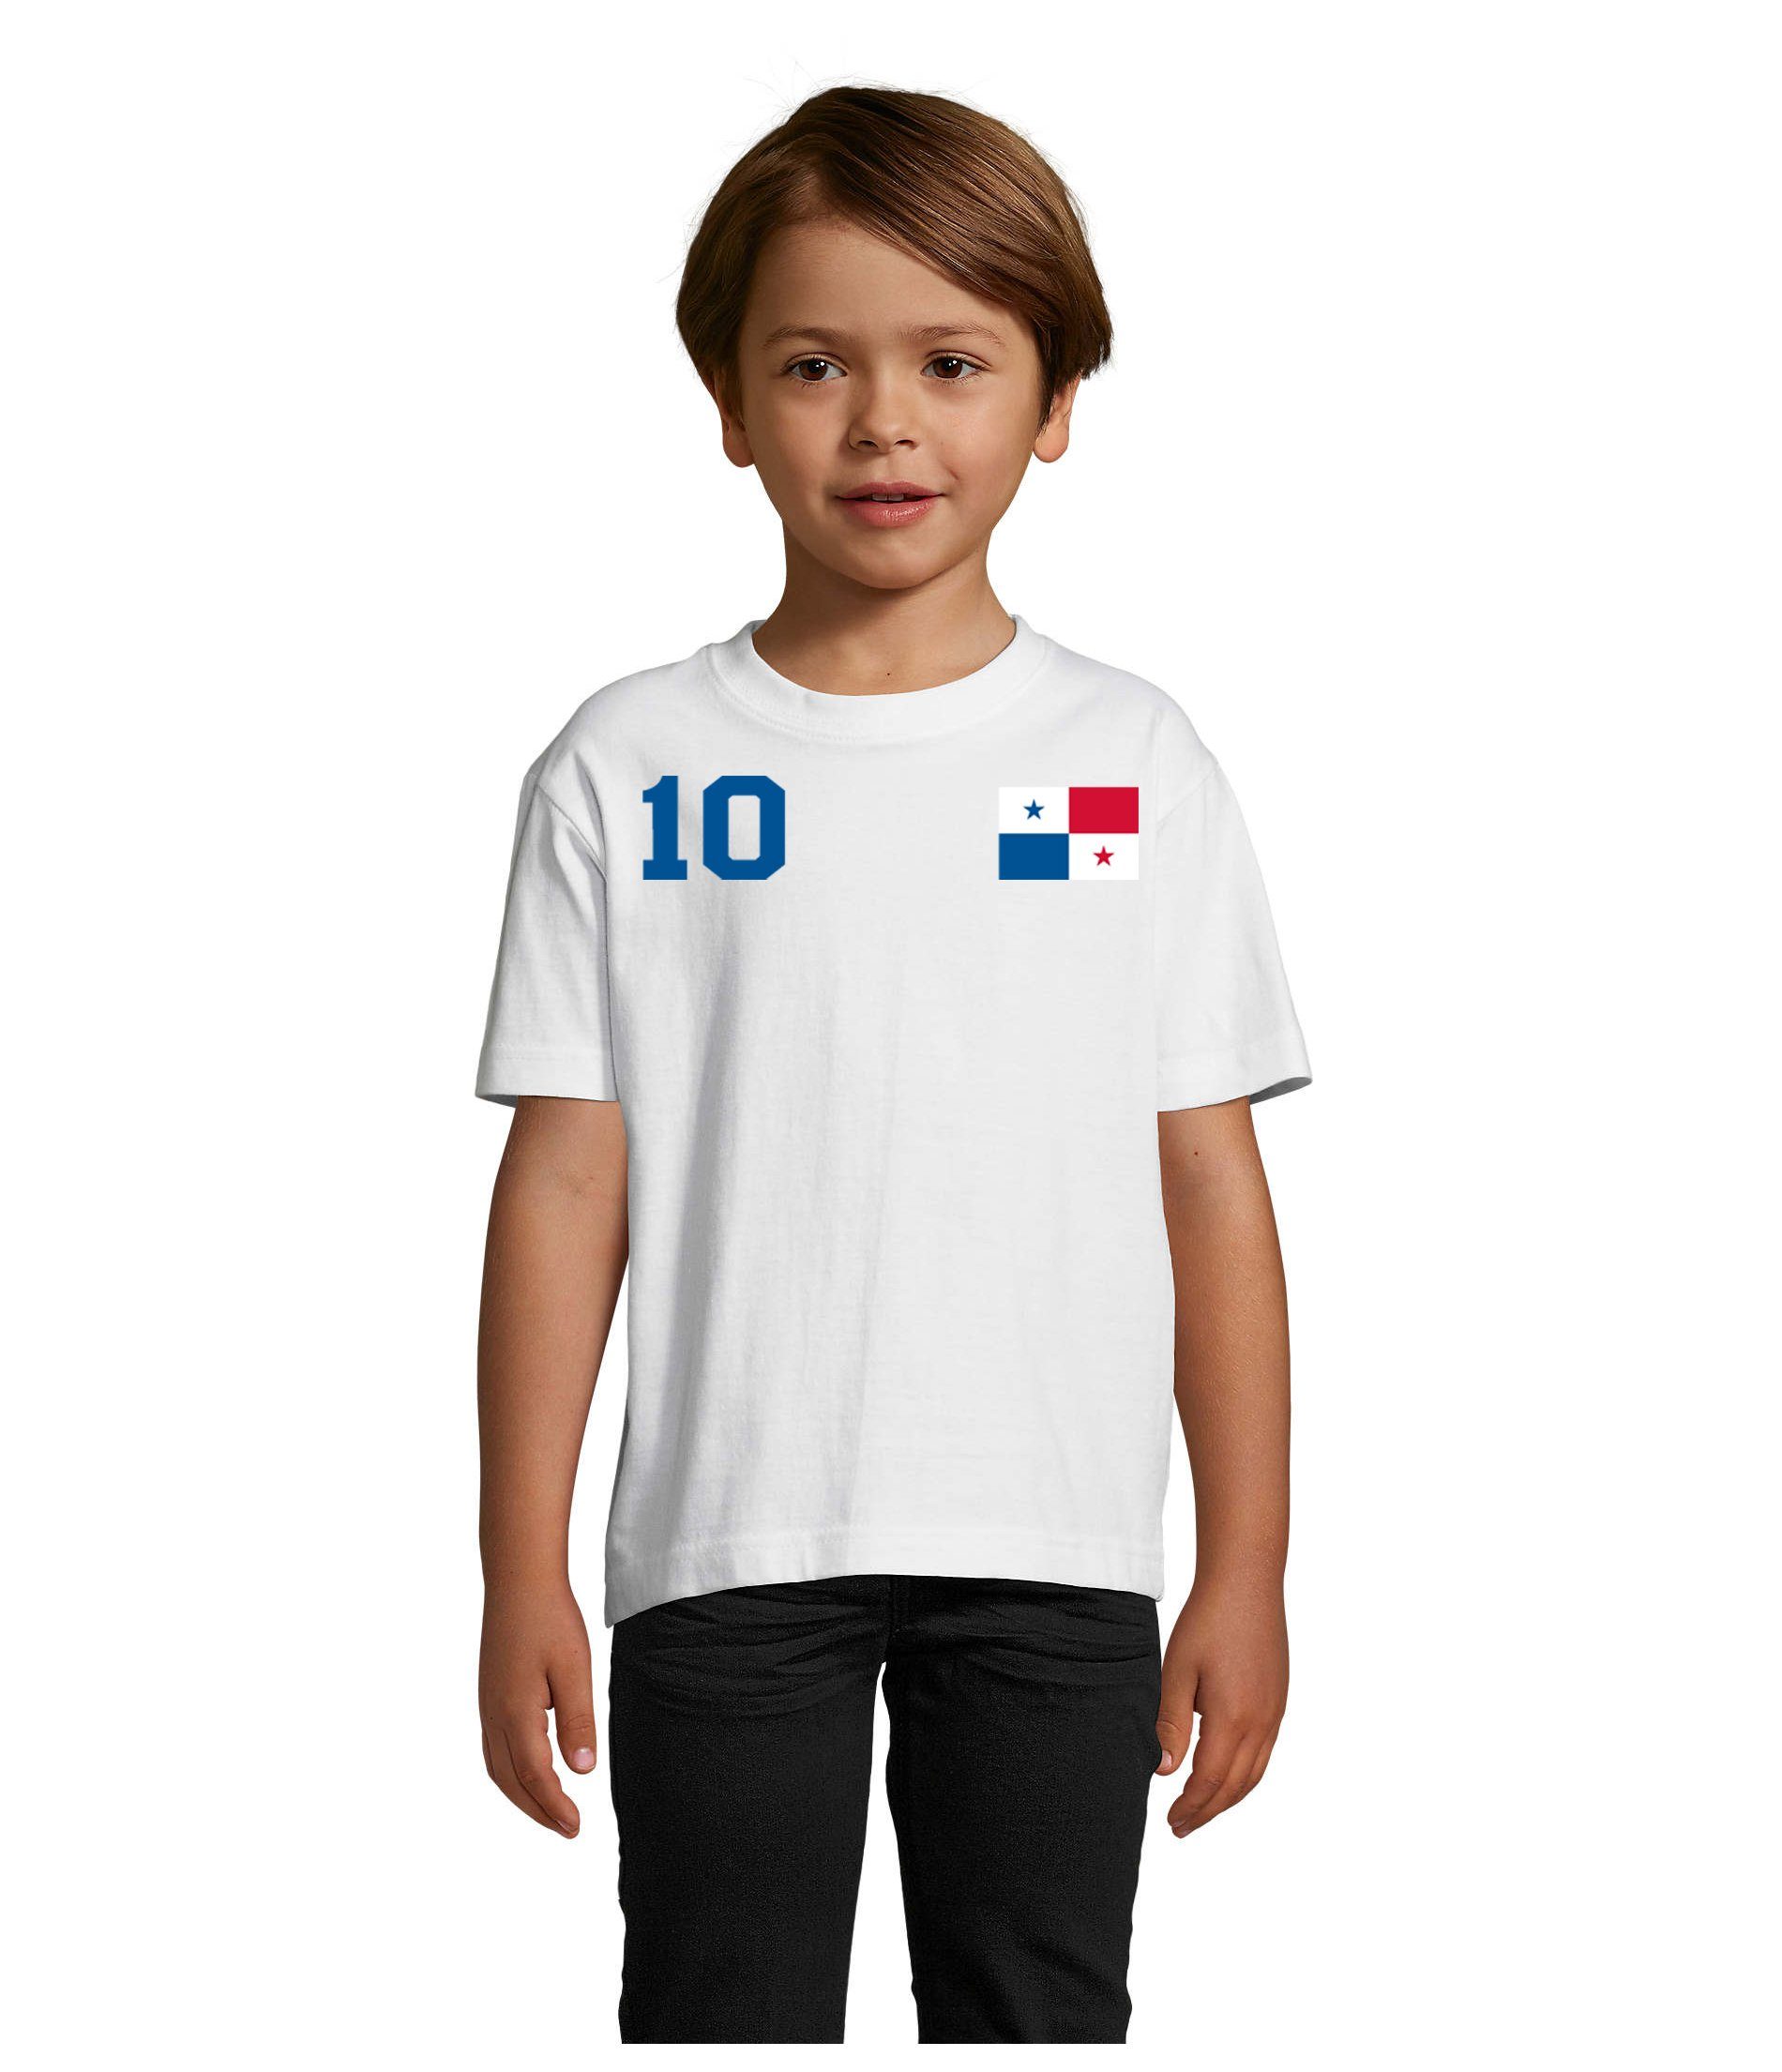 Trikot Kinder Panama WM Brownie Blondie Fußball Fun Sport Fan & Meister Copa America T-Shirt